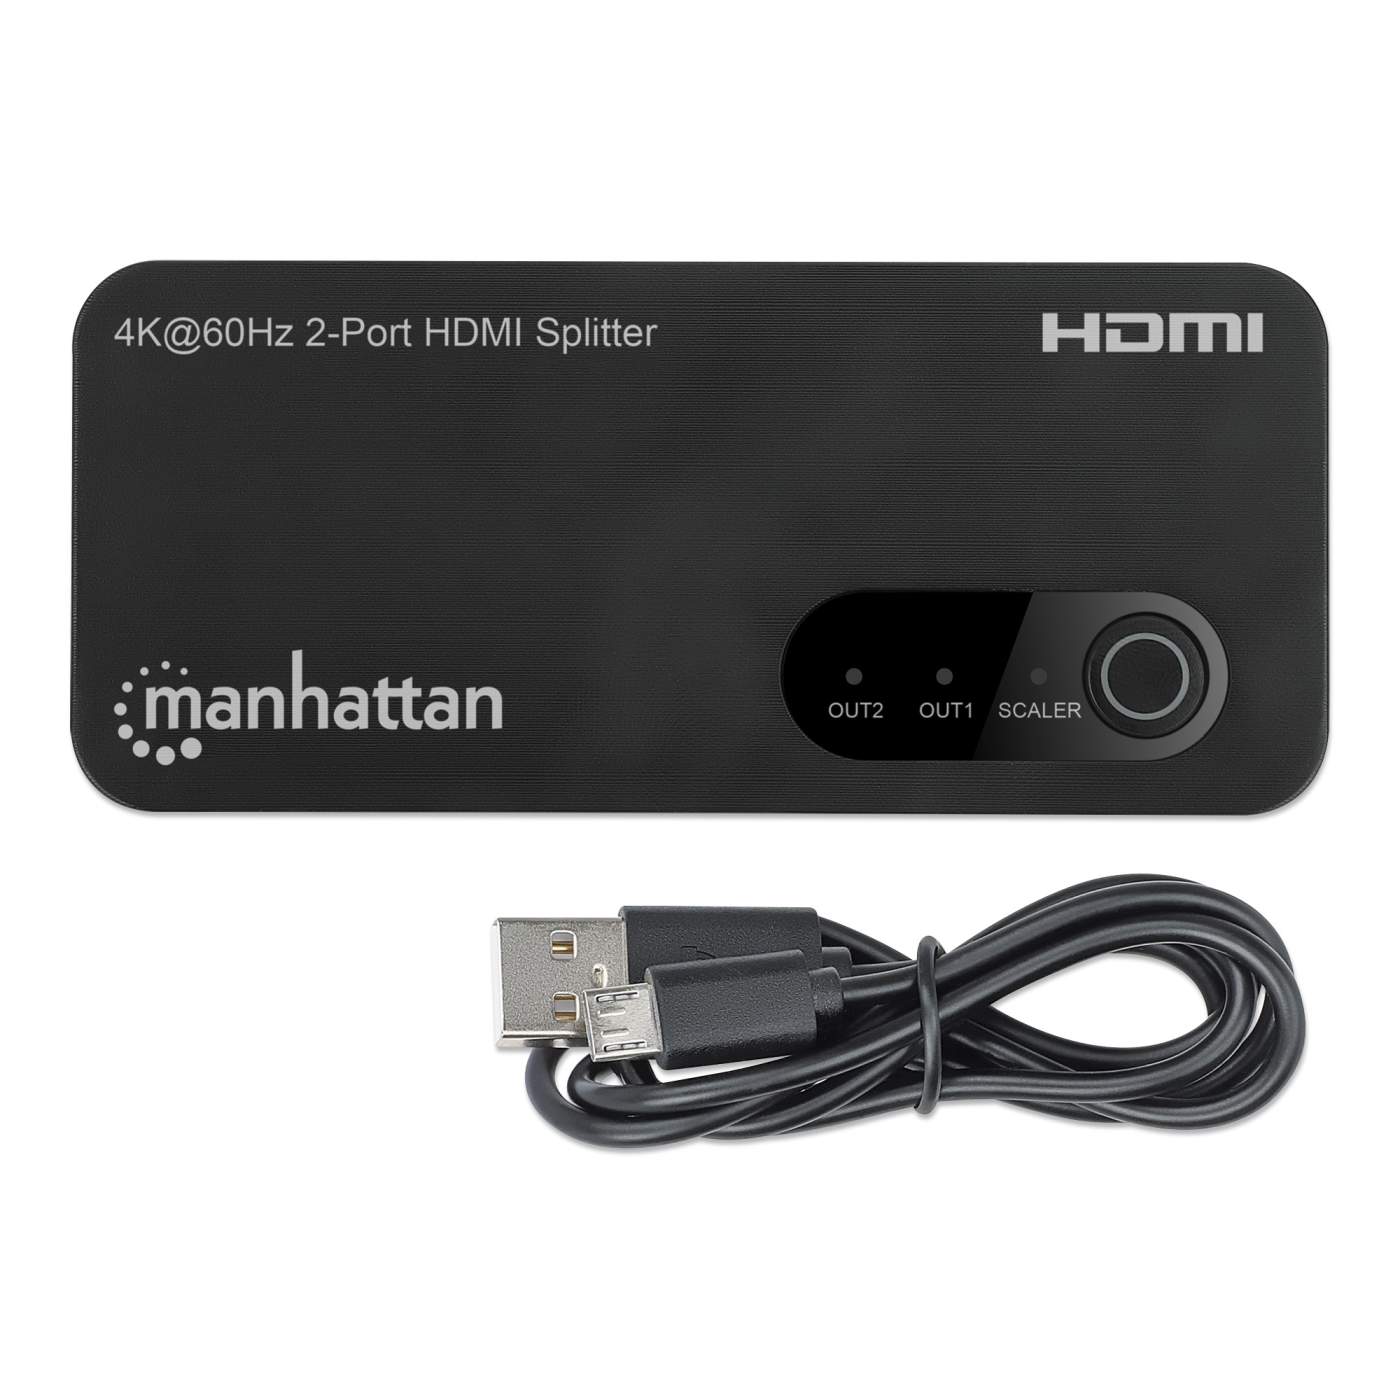 Manhattan 4K@60Hz 2-Port HDMI Splitter with Downscaling (207614)